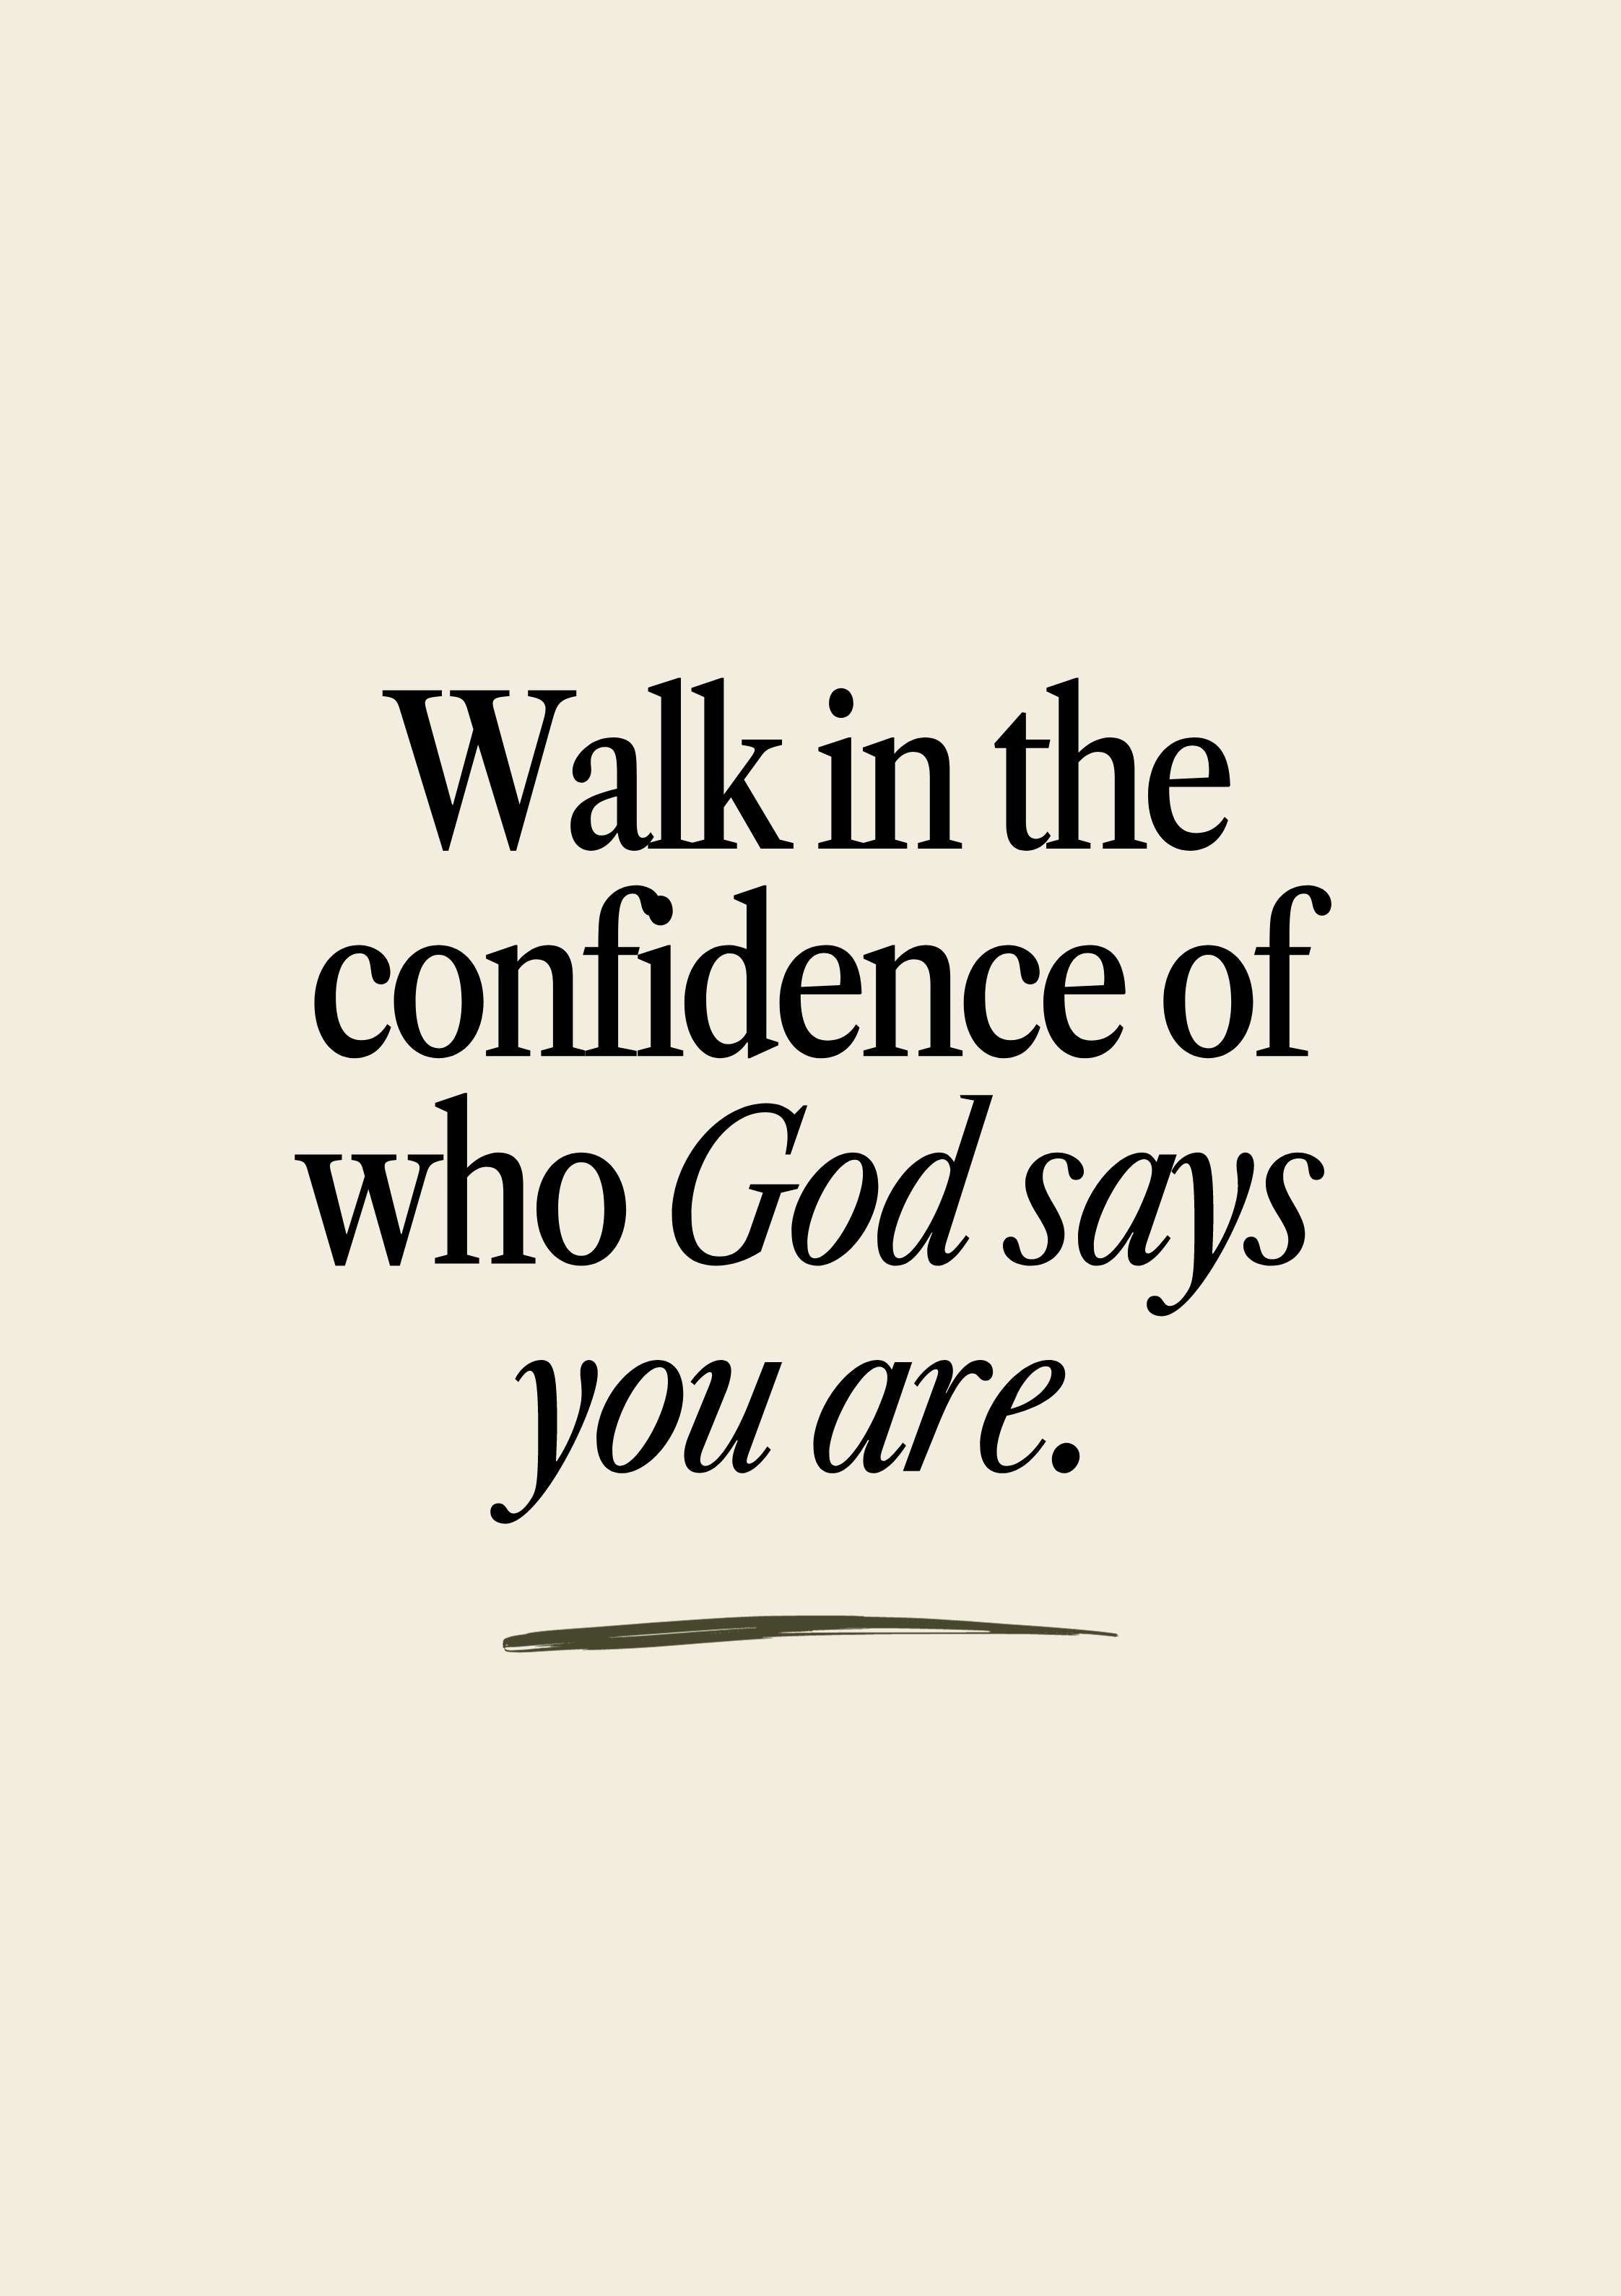 Walk In Confidence (Digital Art Print)